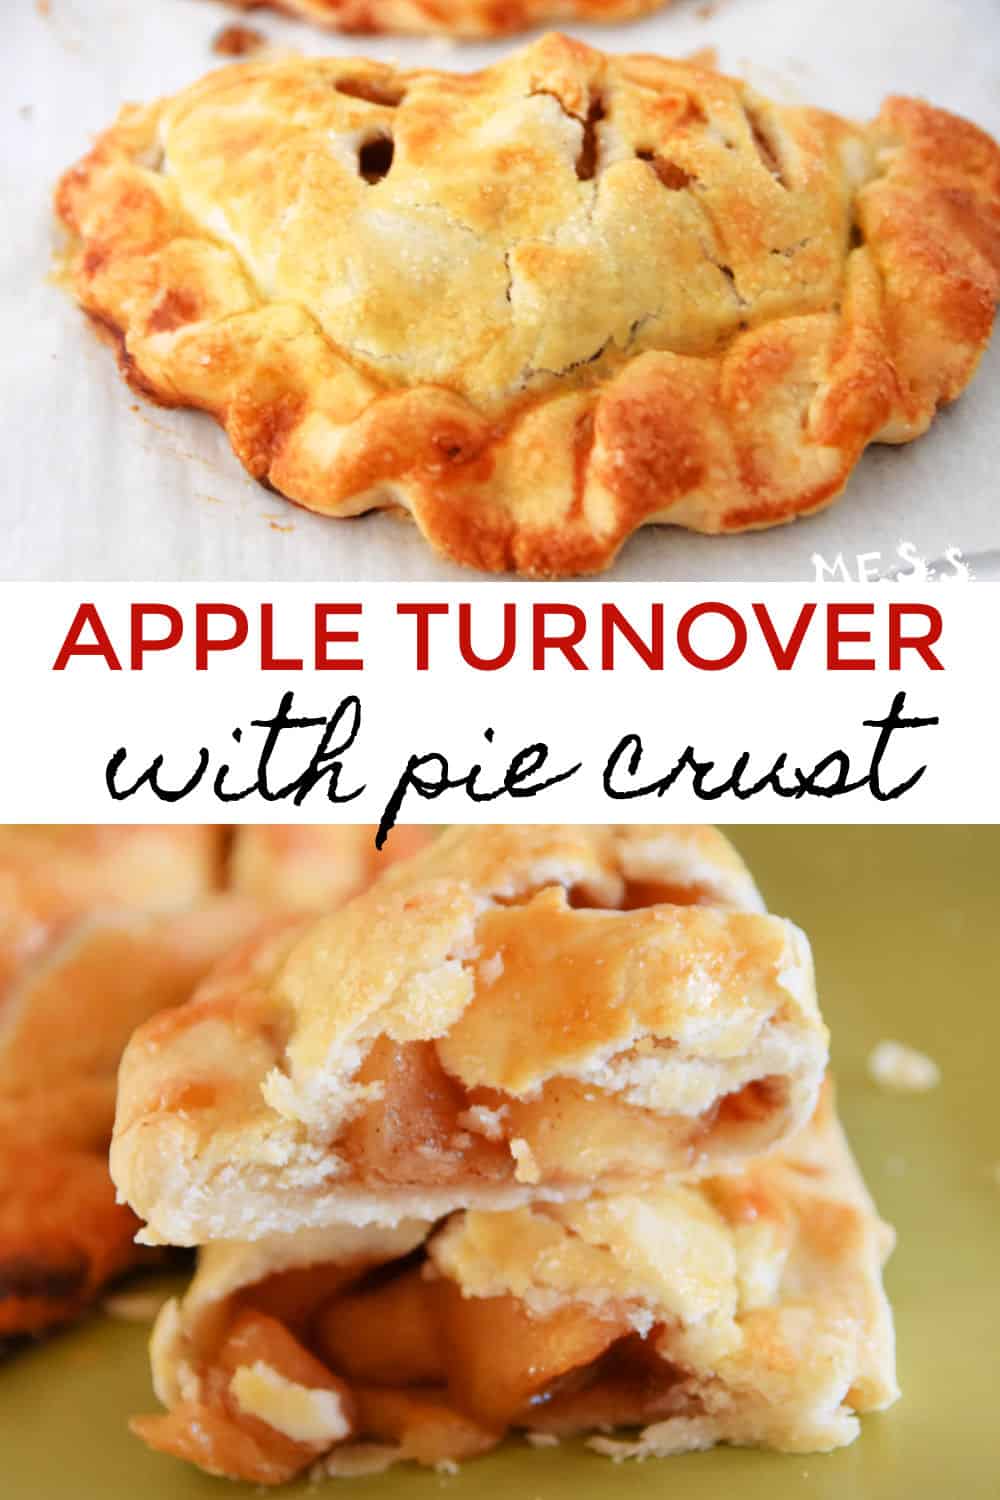 https://www.messforless.net/wp-content/uploads/2022/02/apple-turnover-with-pie-crust-1.jpg